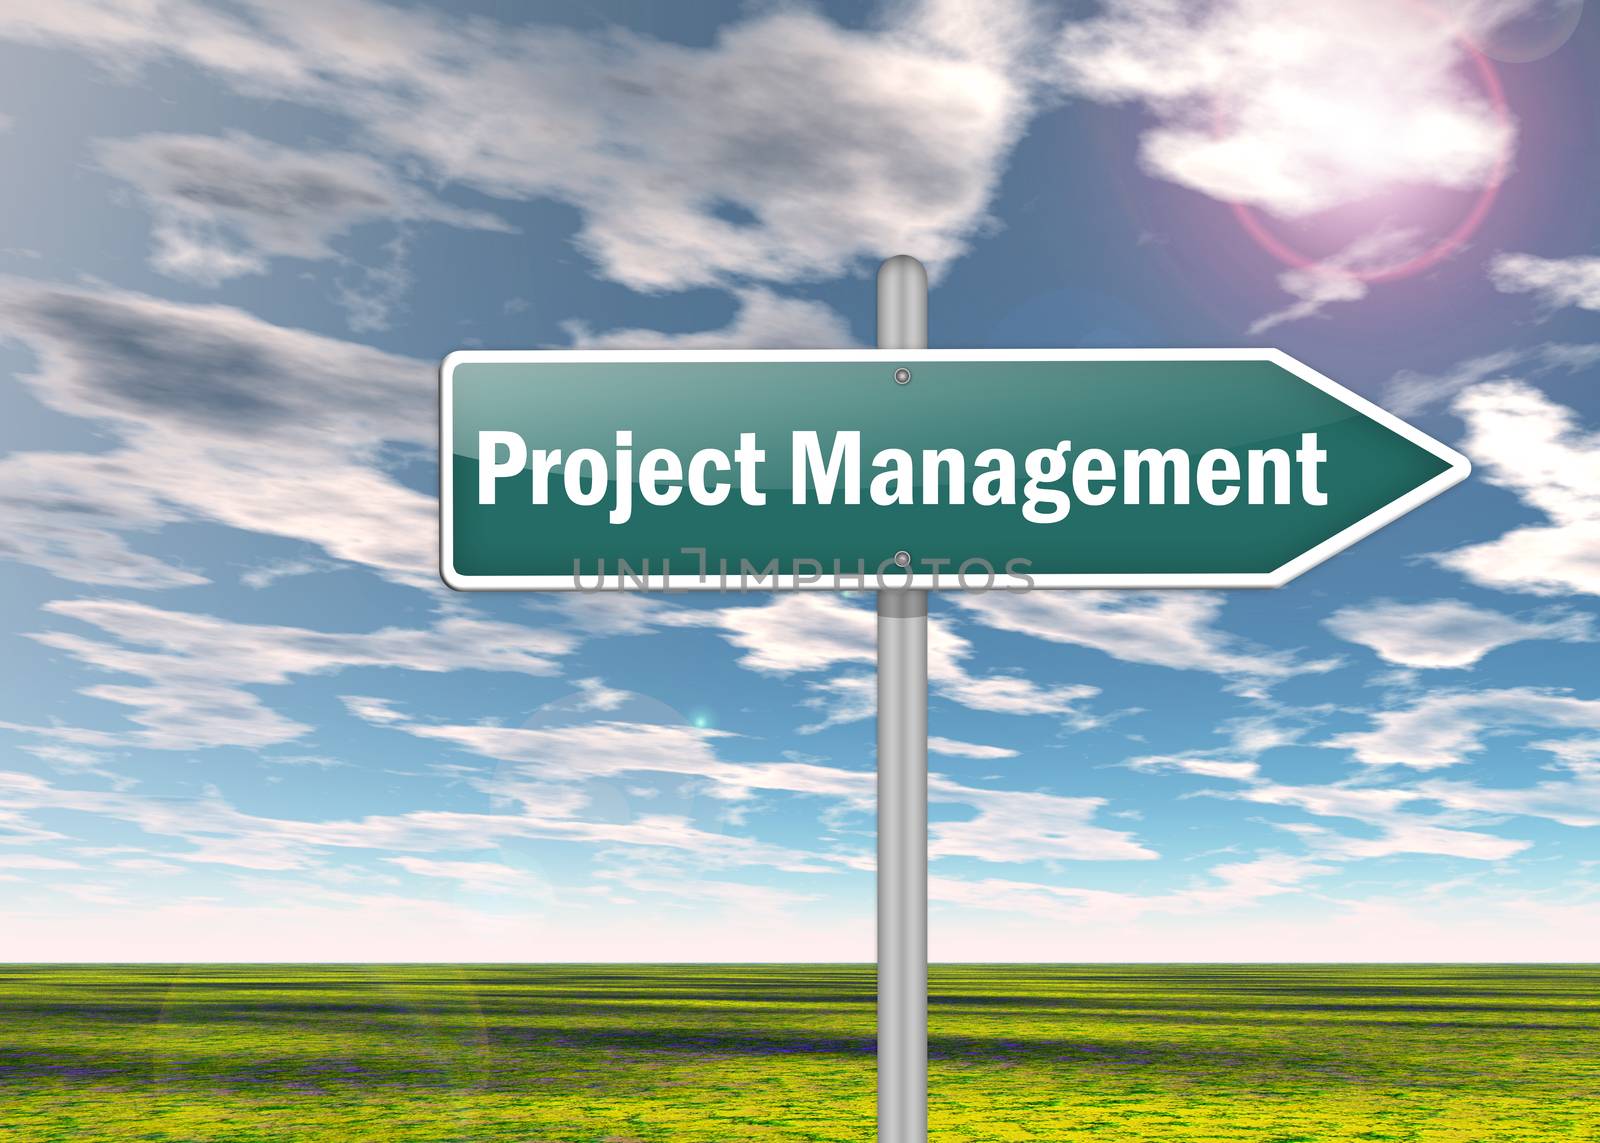 Signpost Project Management by mindscanner